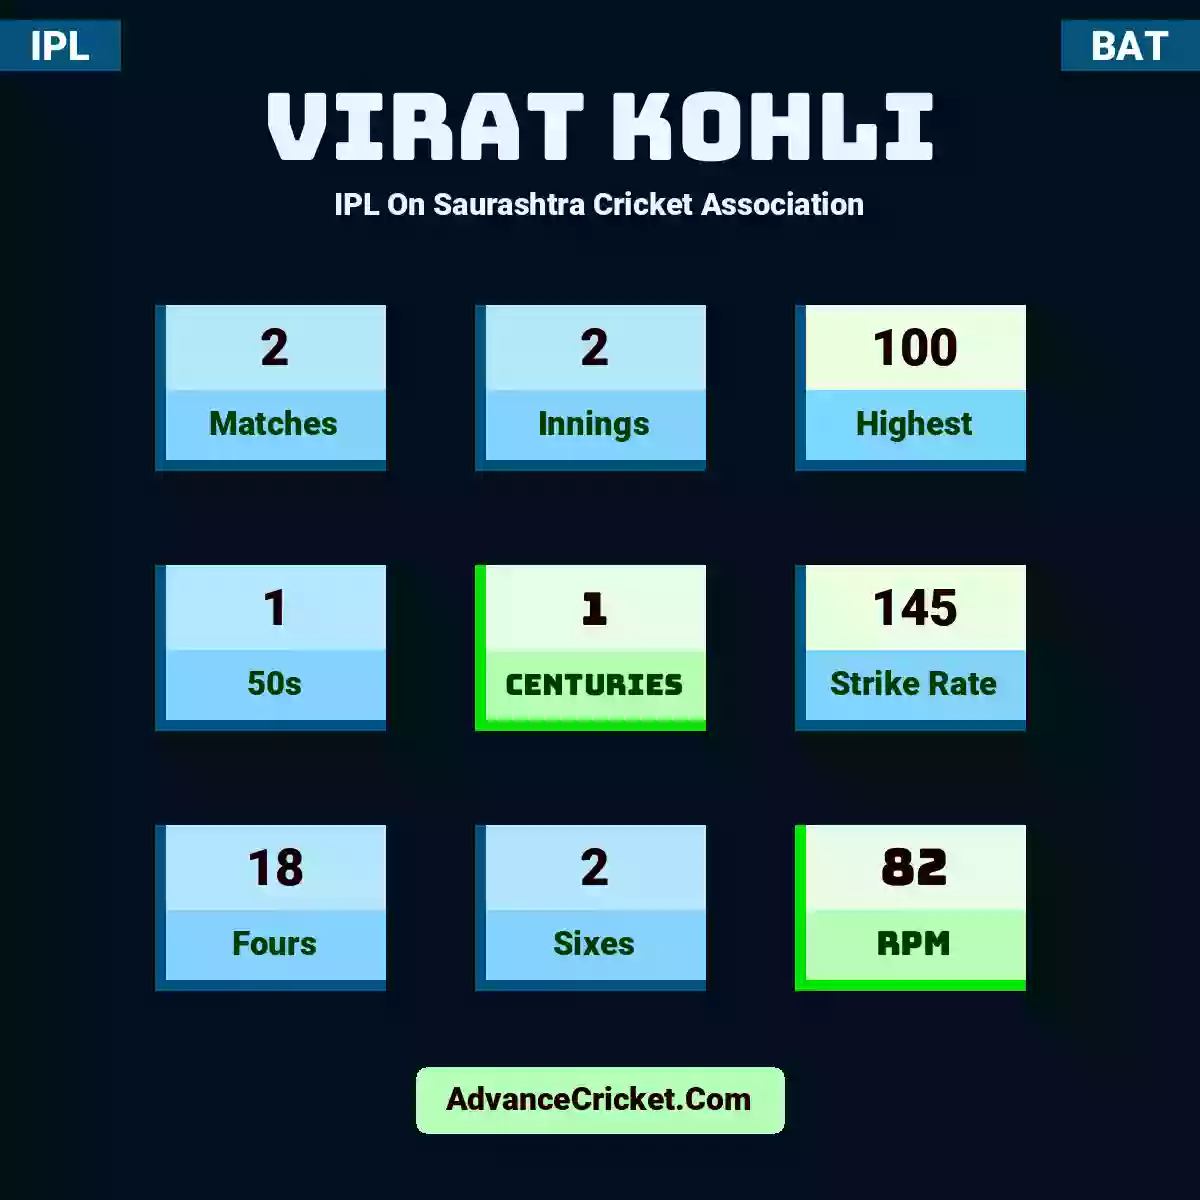 Virat Kohli IPL  On Saurashtra Cricket Association, Virat Kohli played 2 matches, scored 100 runs as highest, 1 half-centuries, and 1 centuries, with a strike rate of 145. V.Kohli hit 18 fours and 2 sixes, with an RPM of 82.